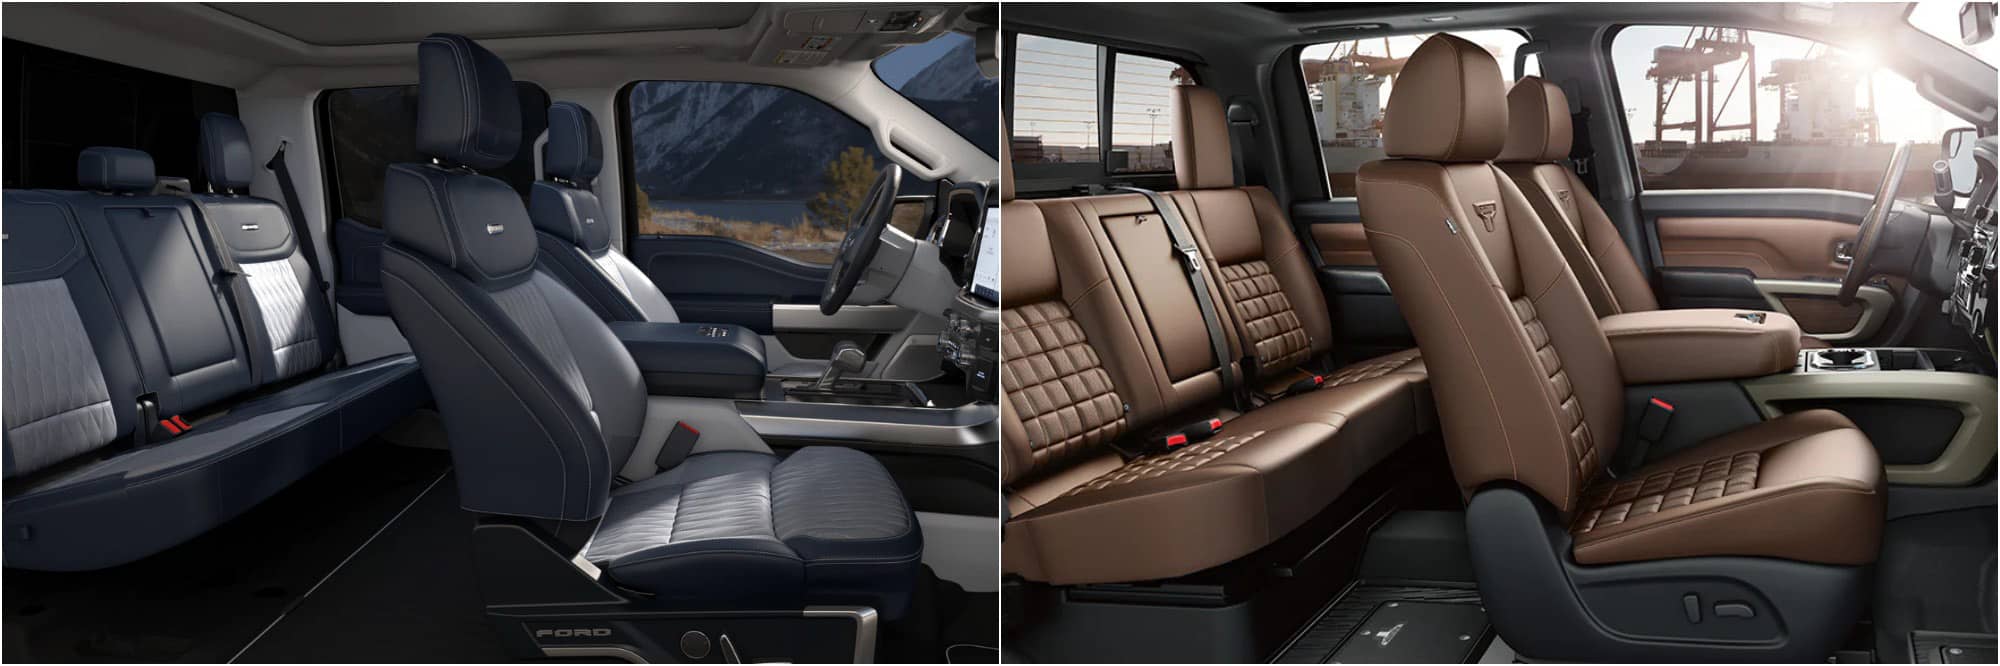 2022 Ford F-150 Vs. Nissan Titan Interior Seating